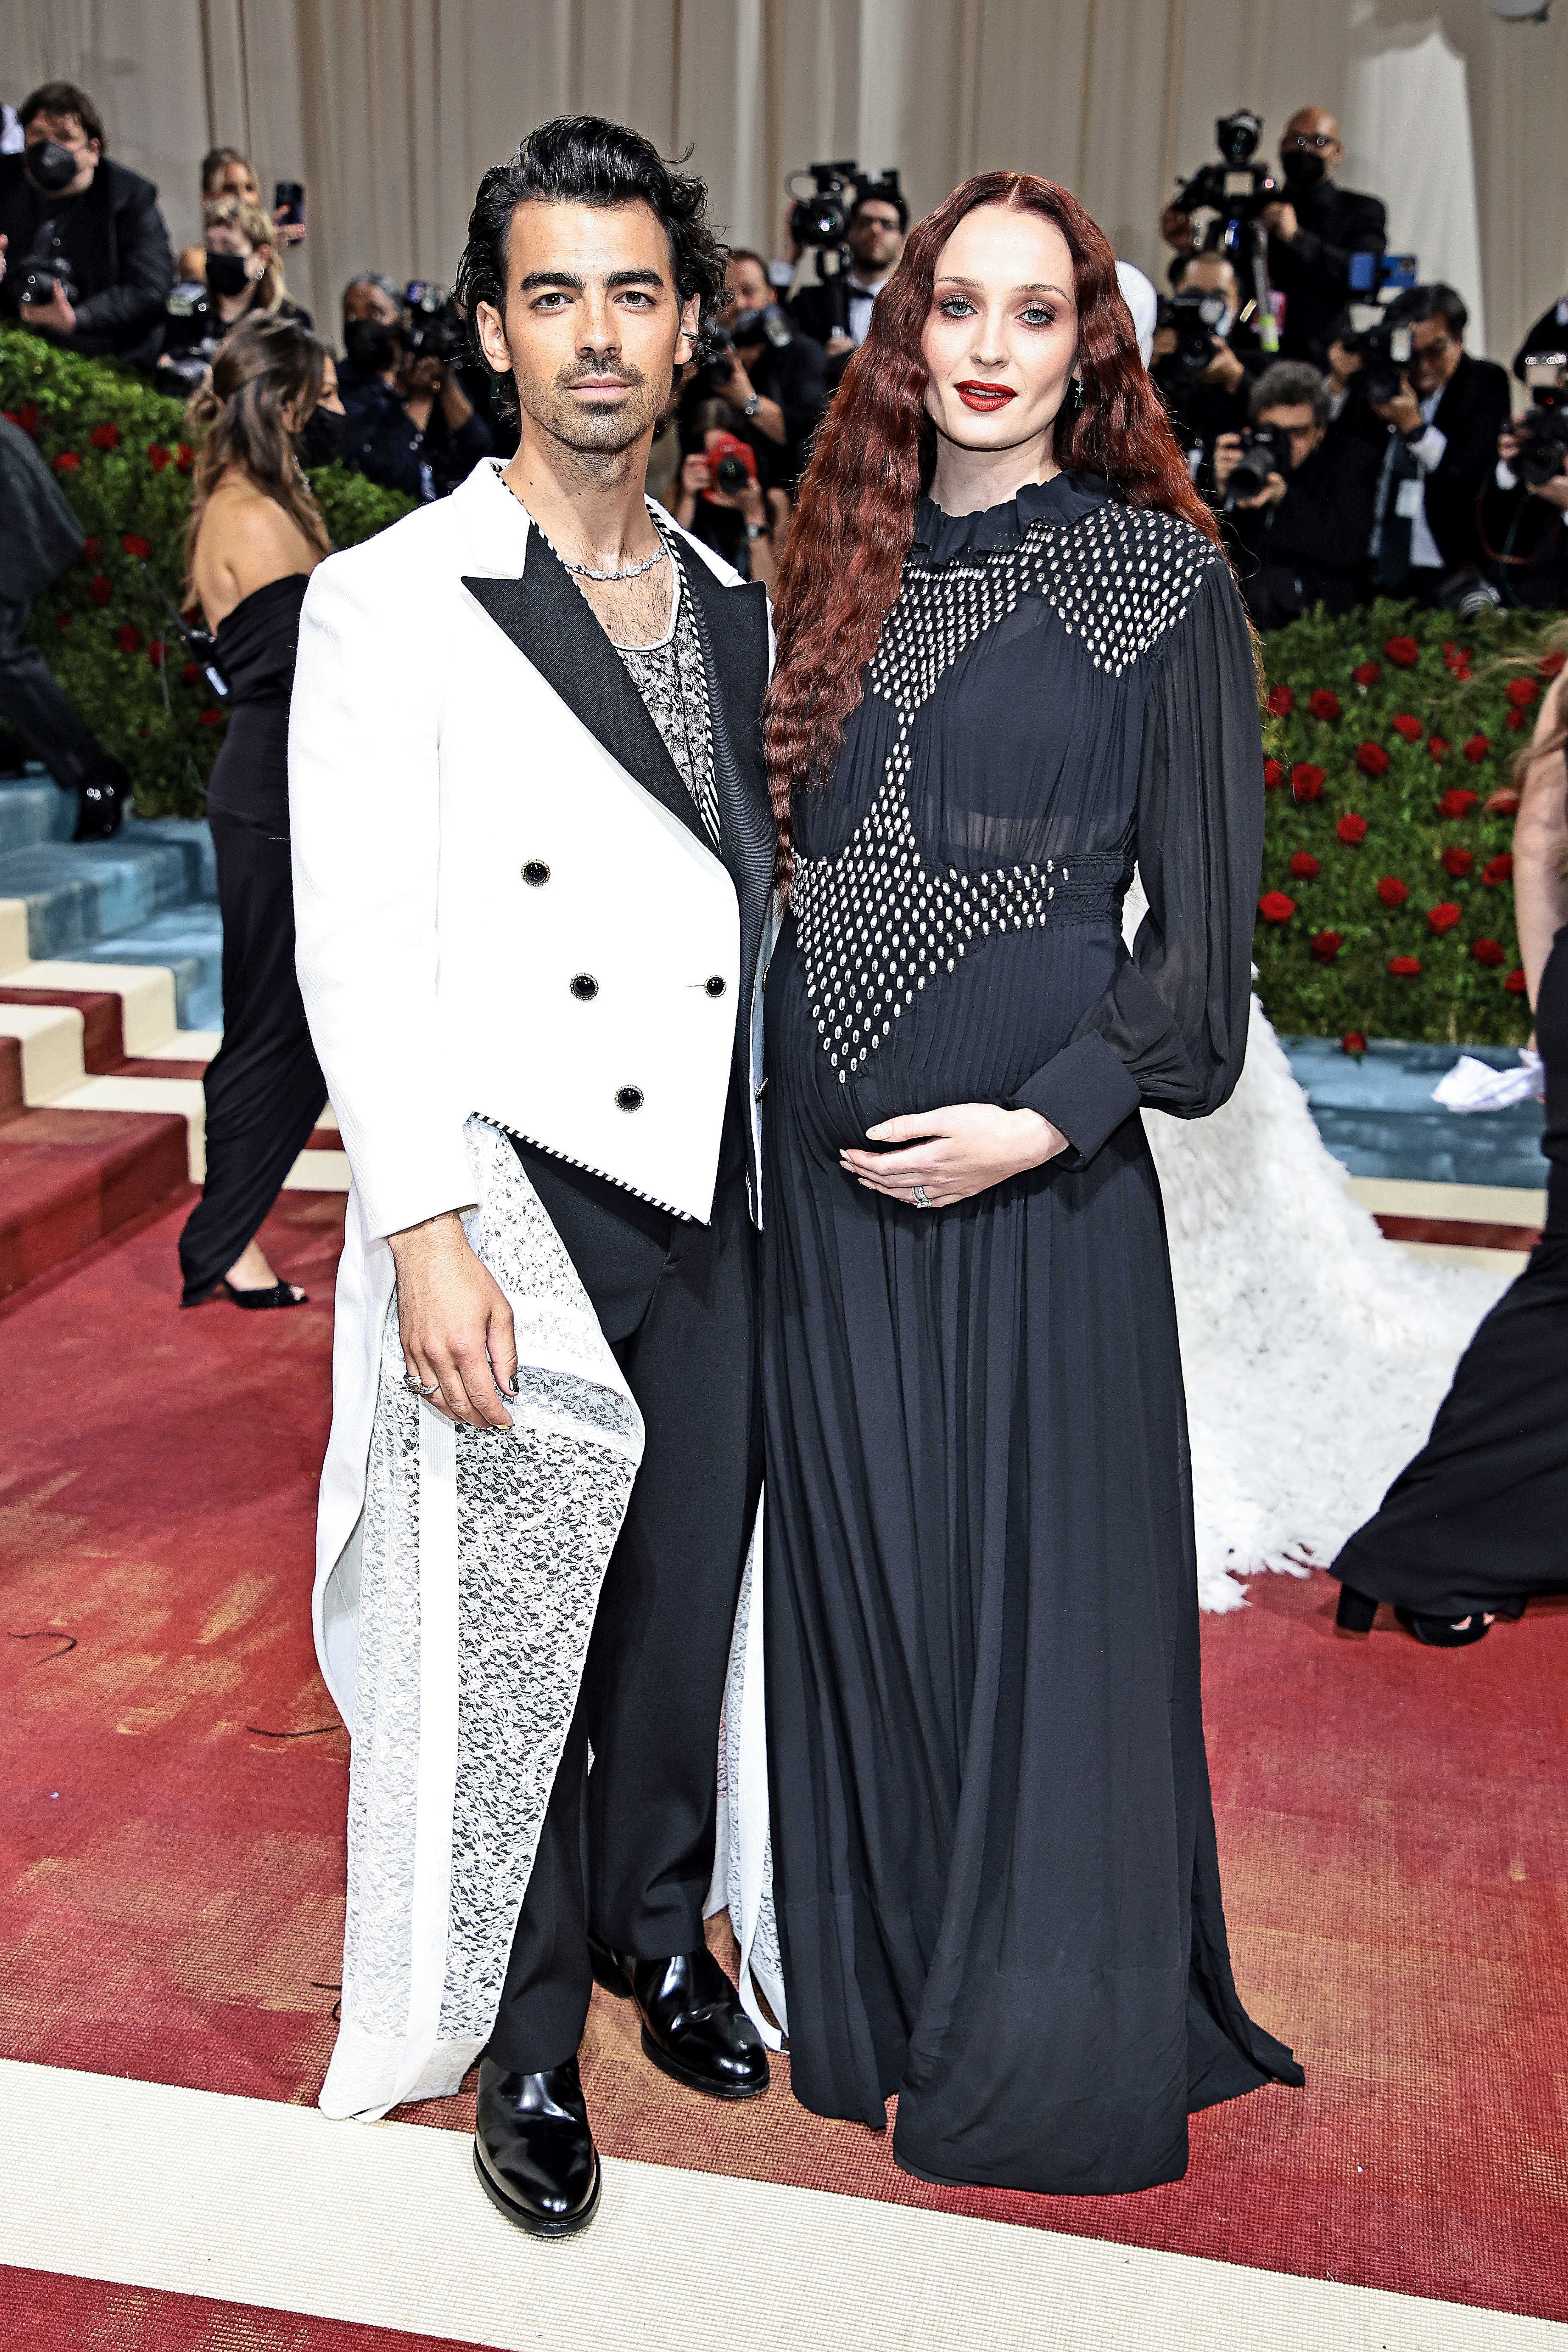 Sophie Turner and Joe Jonas Walk the Red Carpet in Louis Vuitton